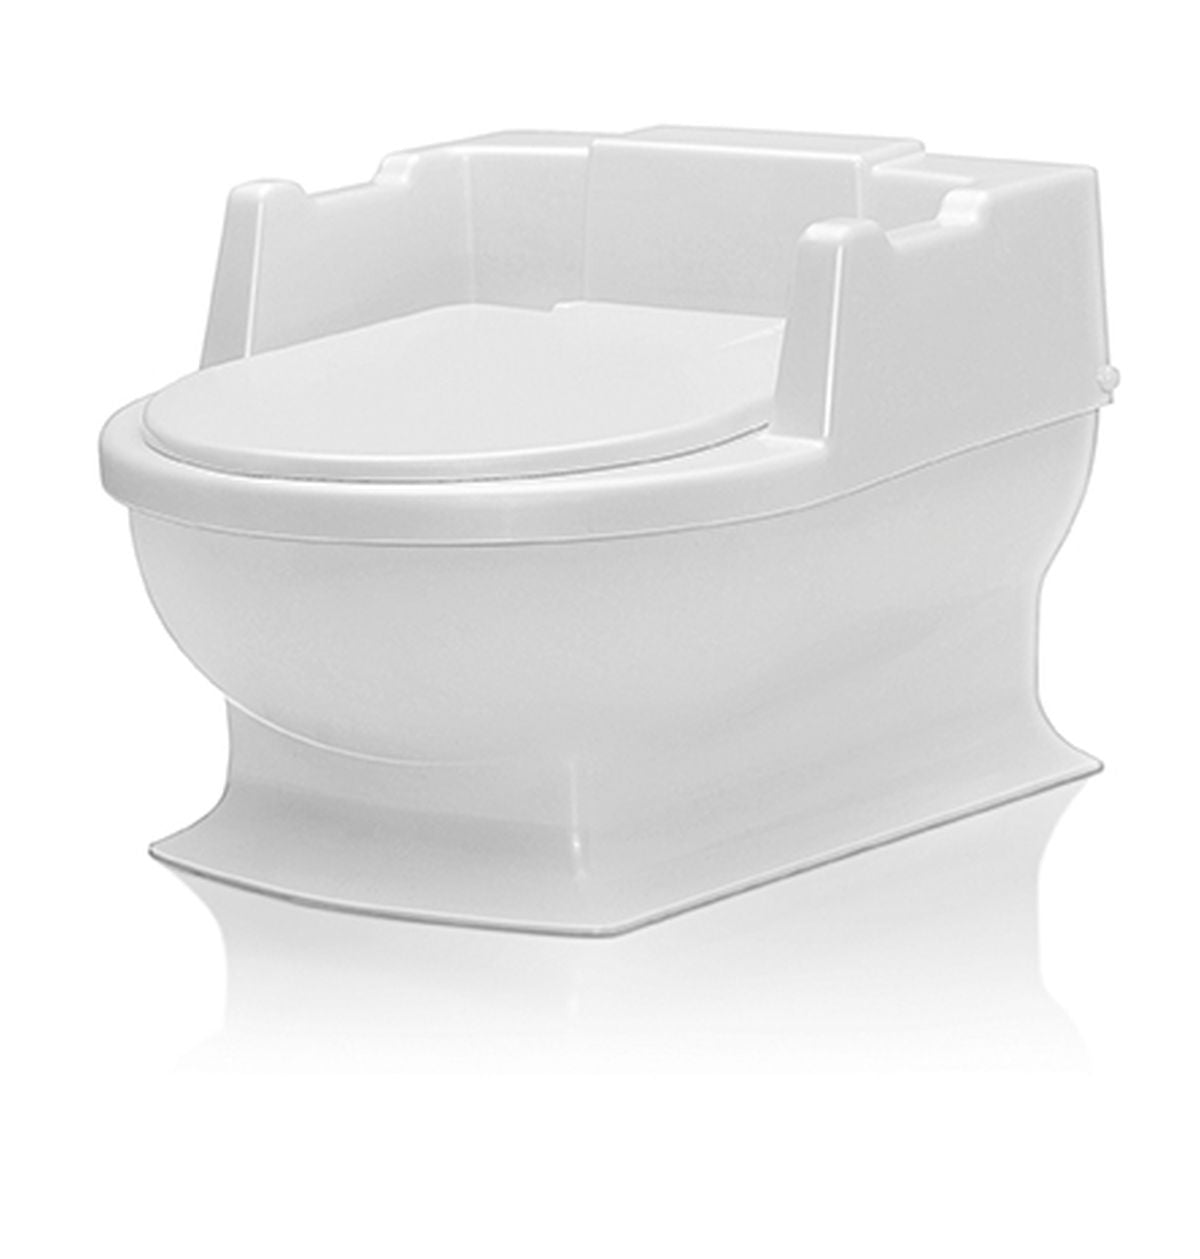 Reer Sitzfritz - The mini-toilet for growing up (White)